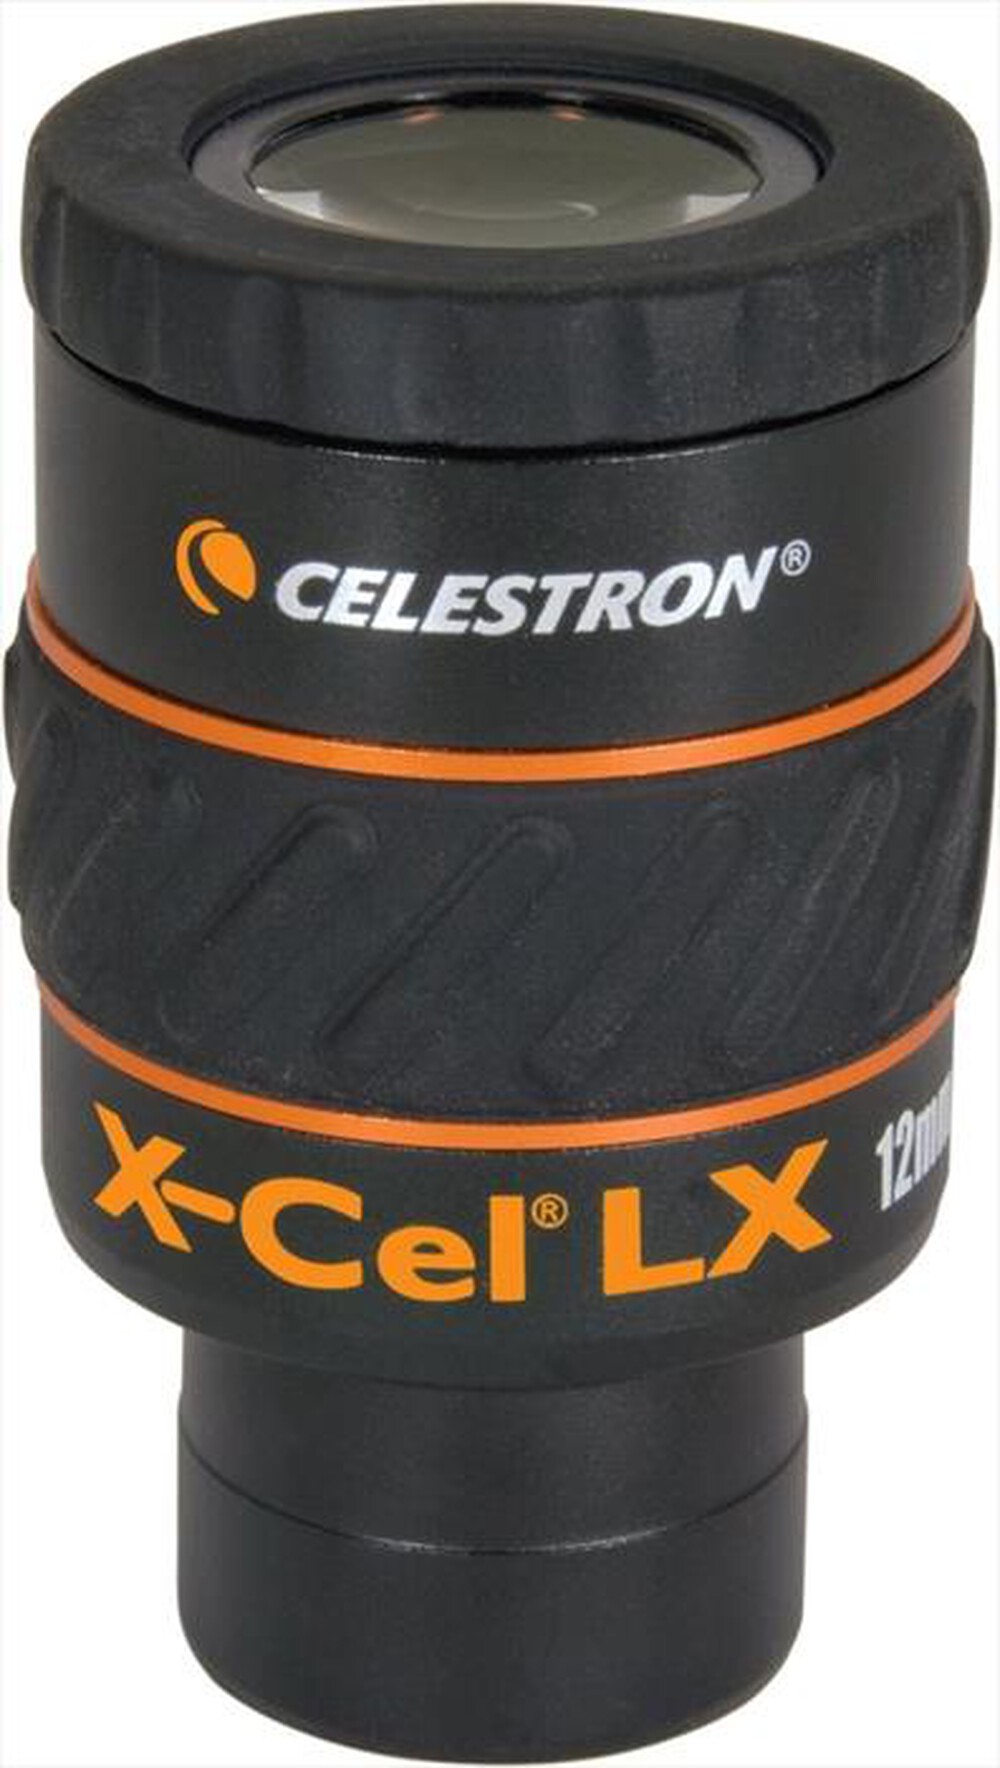 "CELESTRON - X-CEL LX 9MM"